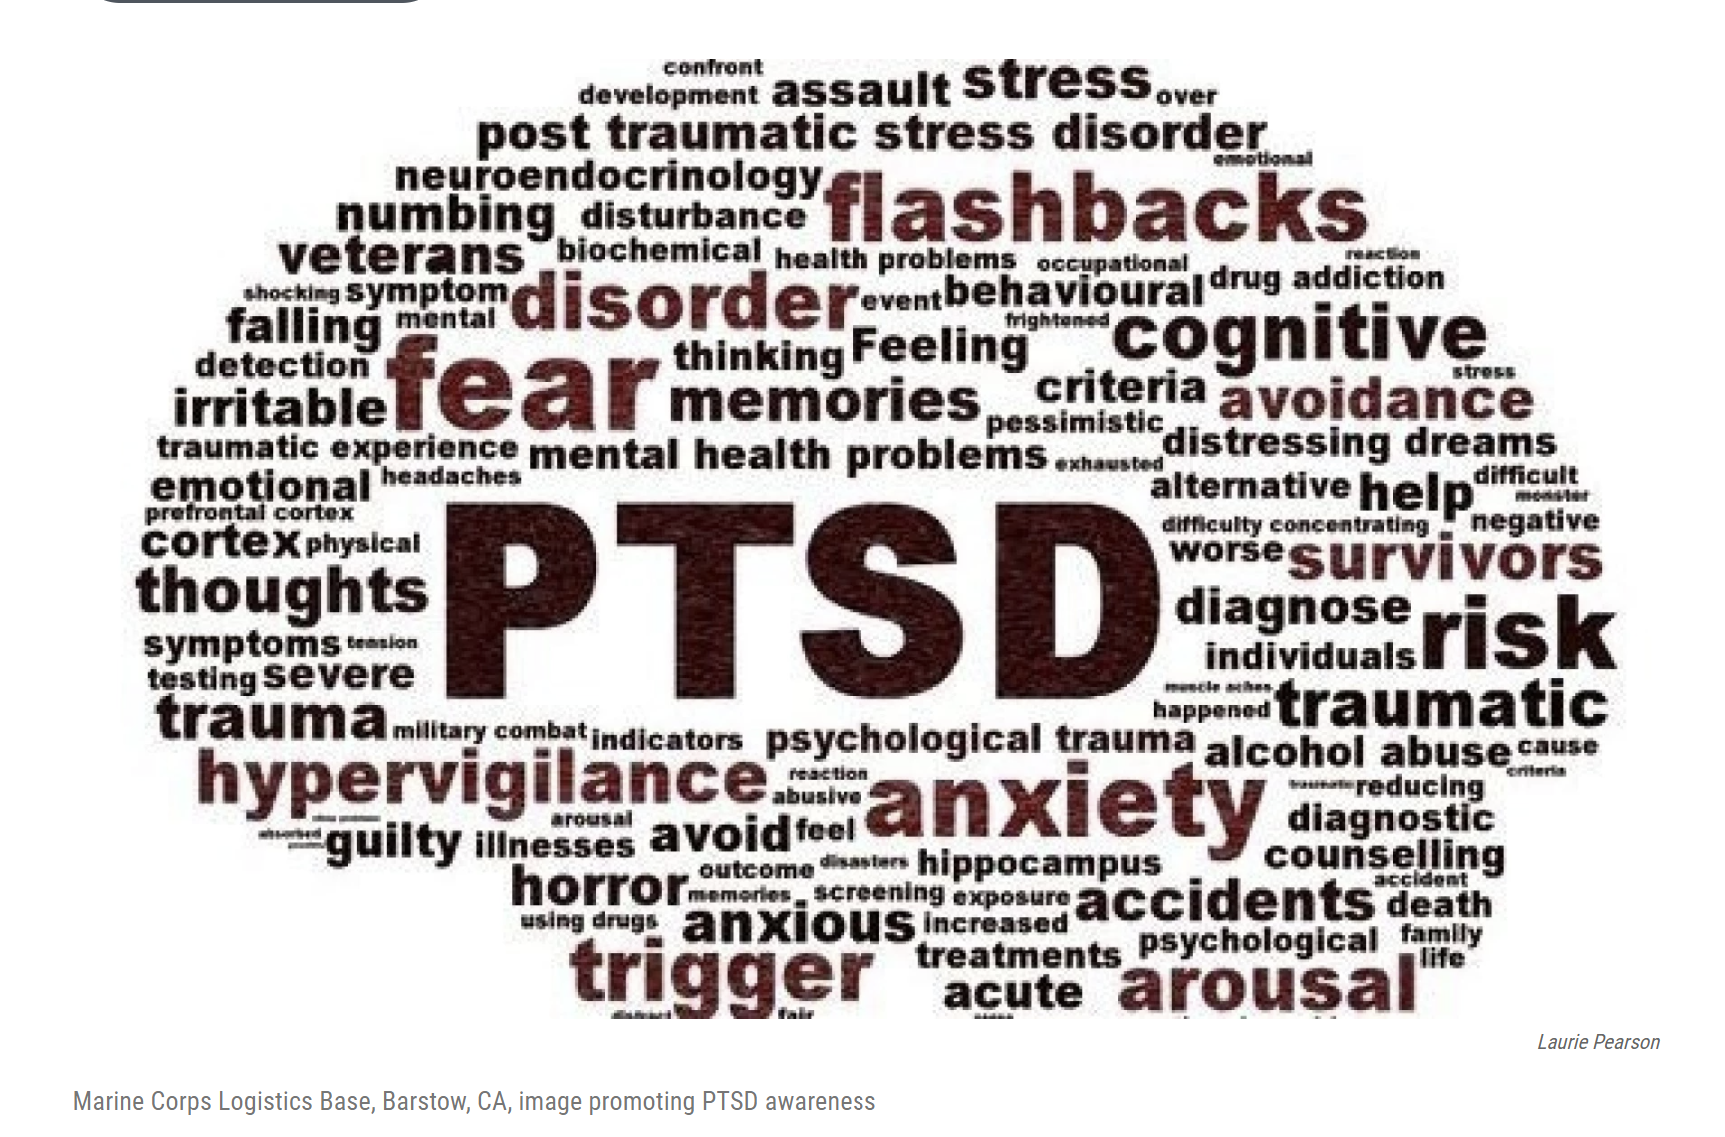 What is C-PTSD